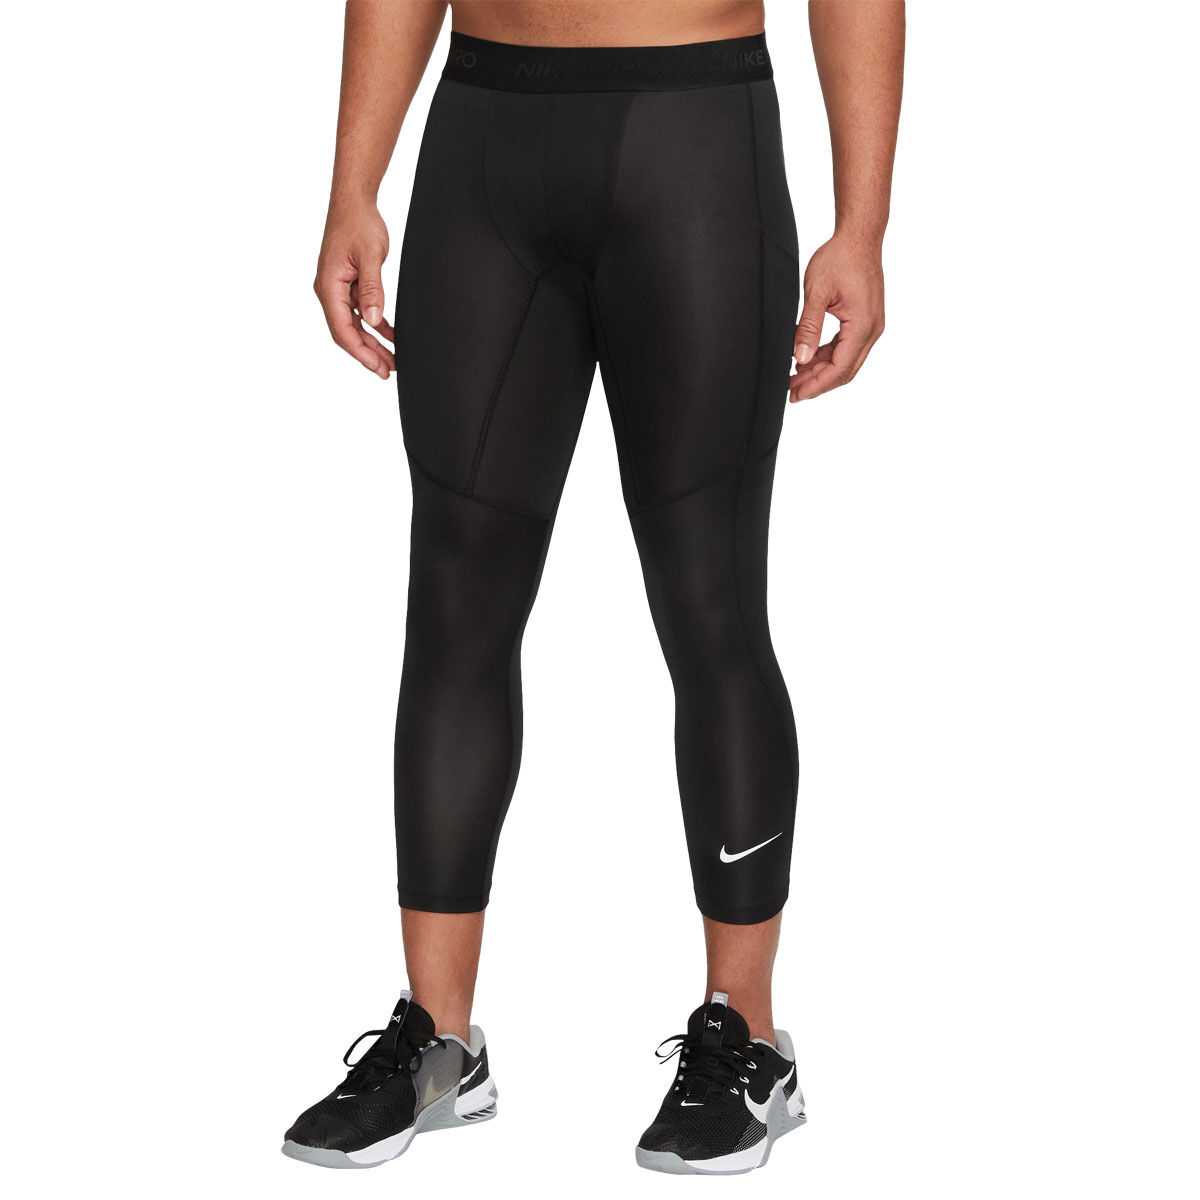 Nike Men's Pro Combat Compression Shorts Running Sport Training - Black